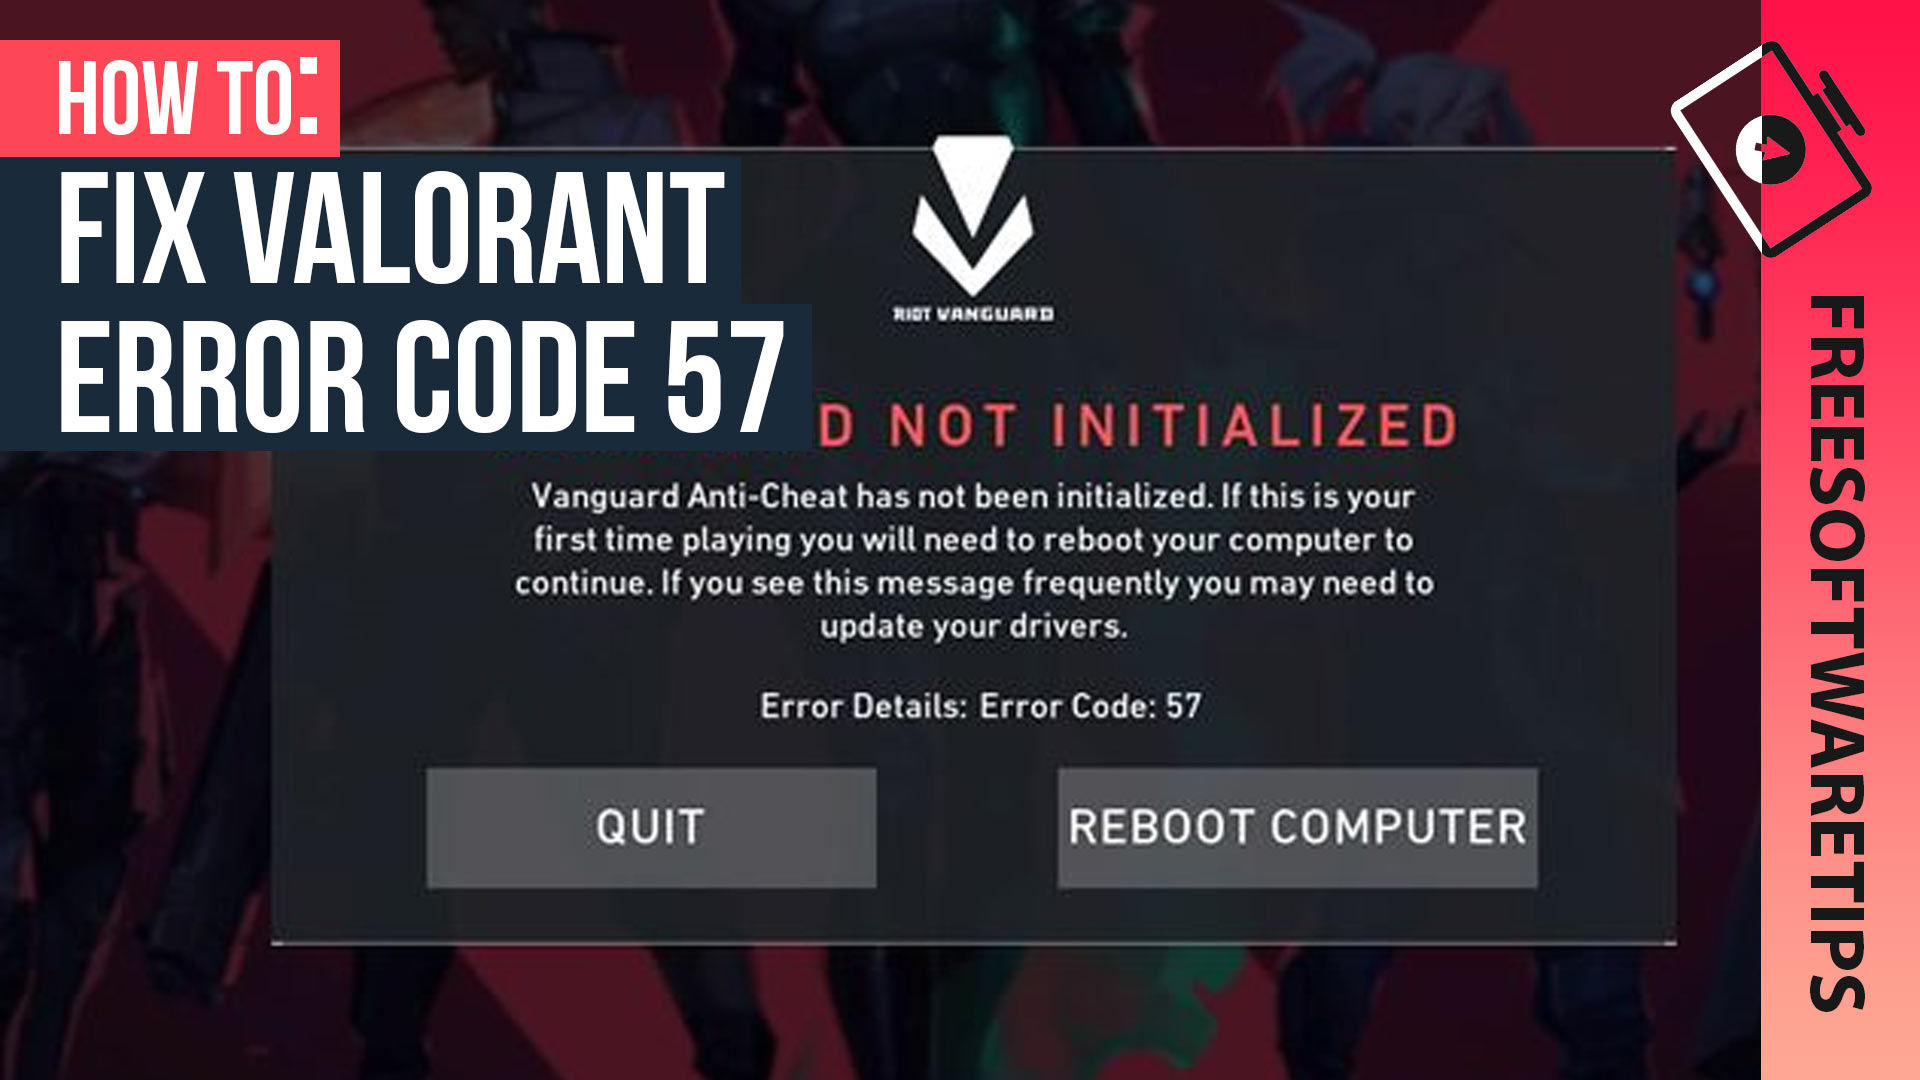 Fix-Valorant-Error-Code-57-Vanguard-is-not-initialized